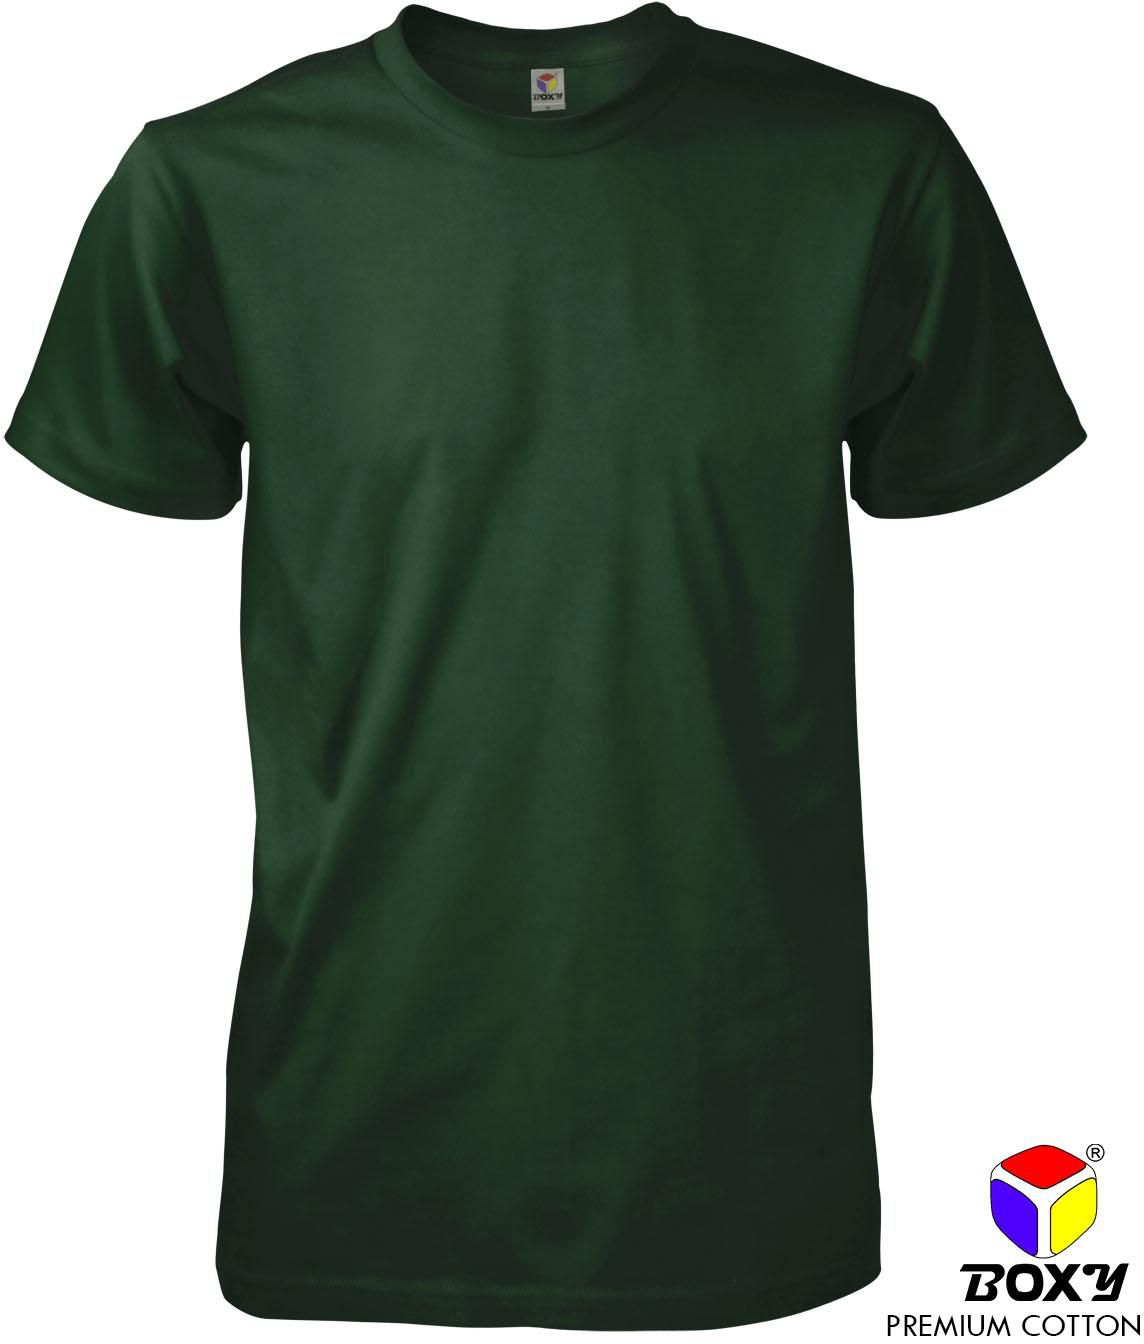 BOXY Premium Cotton Round Neck T-shirt - 7 Sizes (Forest Green)